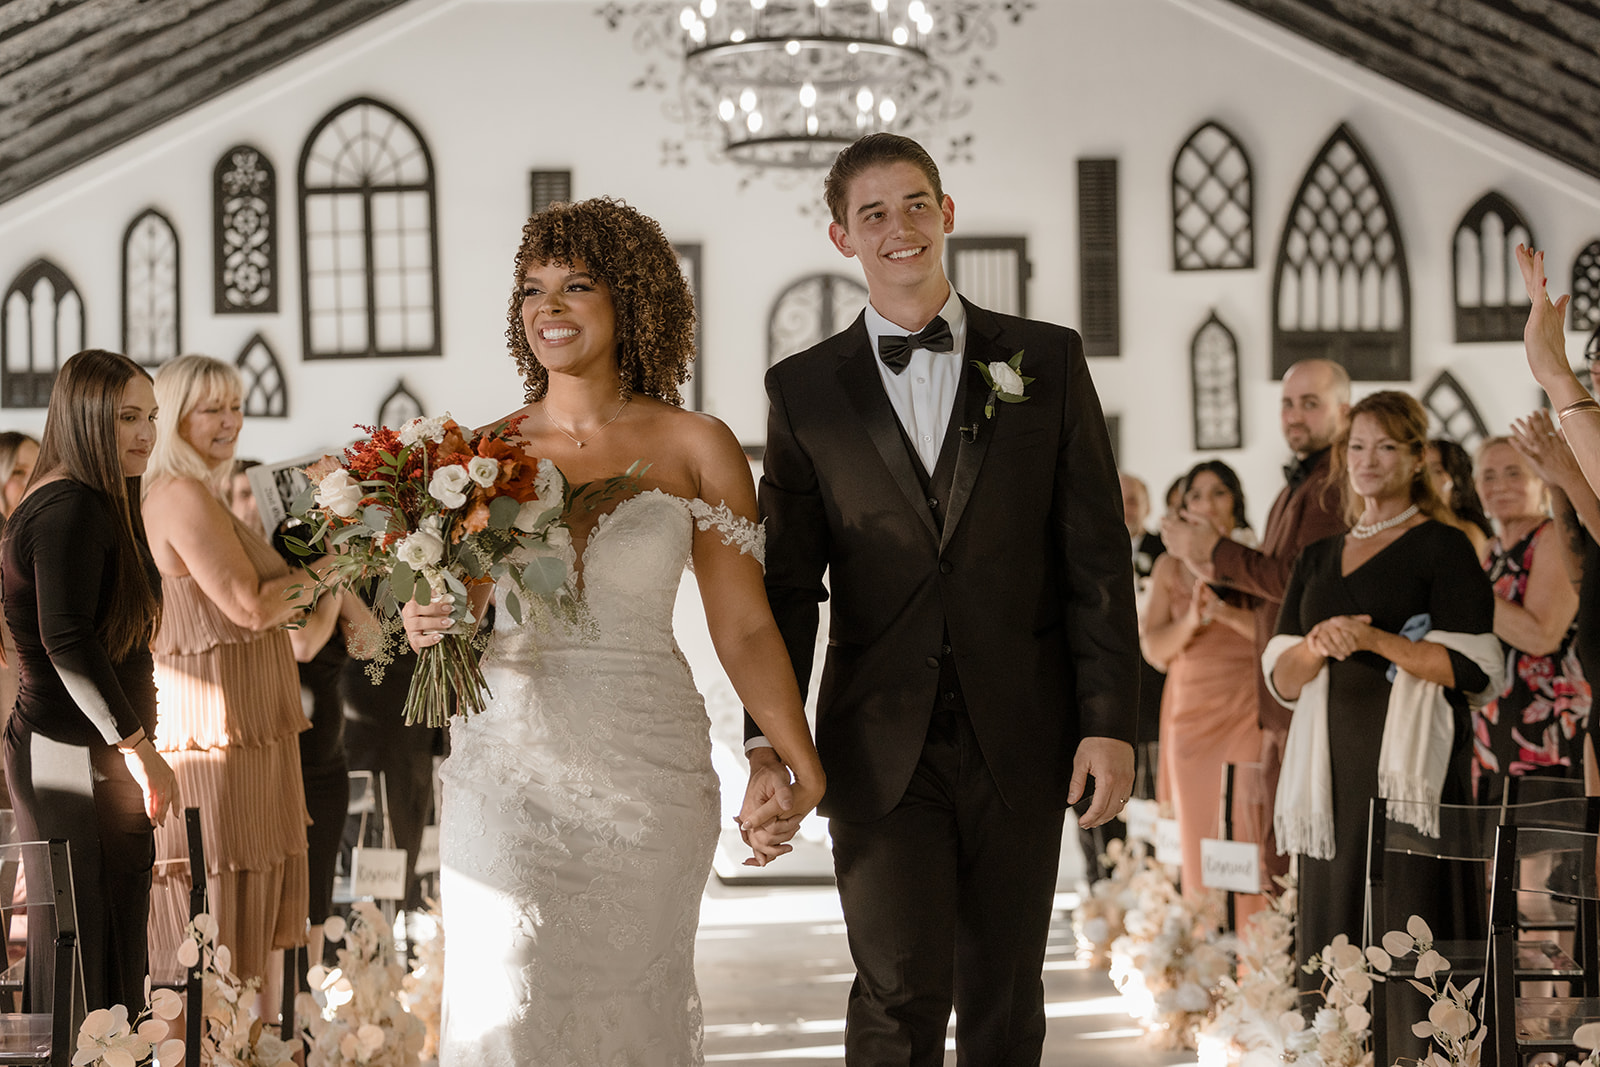 Newlyweds celebrating at their wedding ceremony in Florida wedding venue